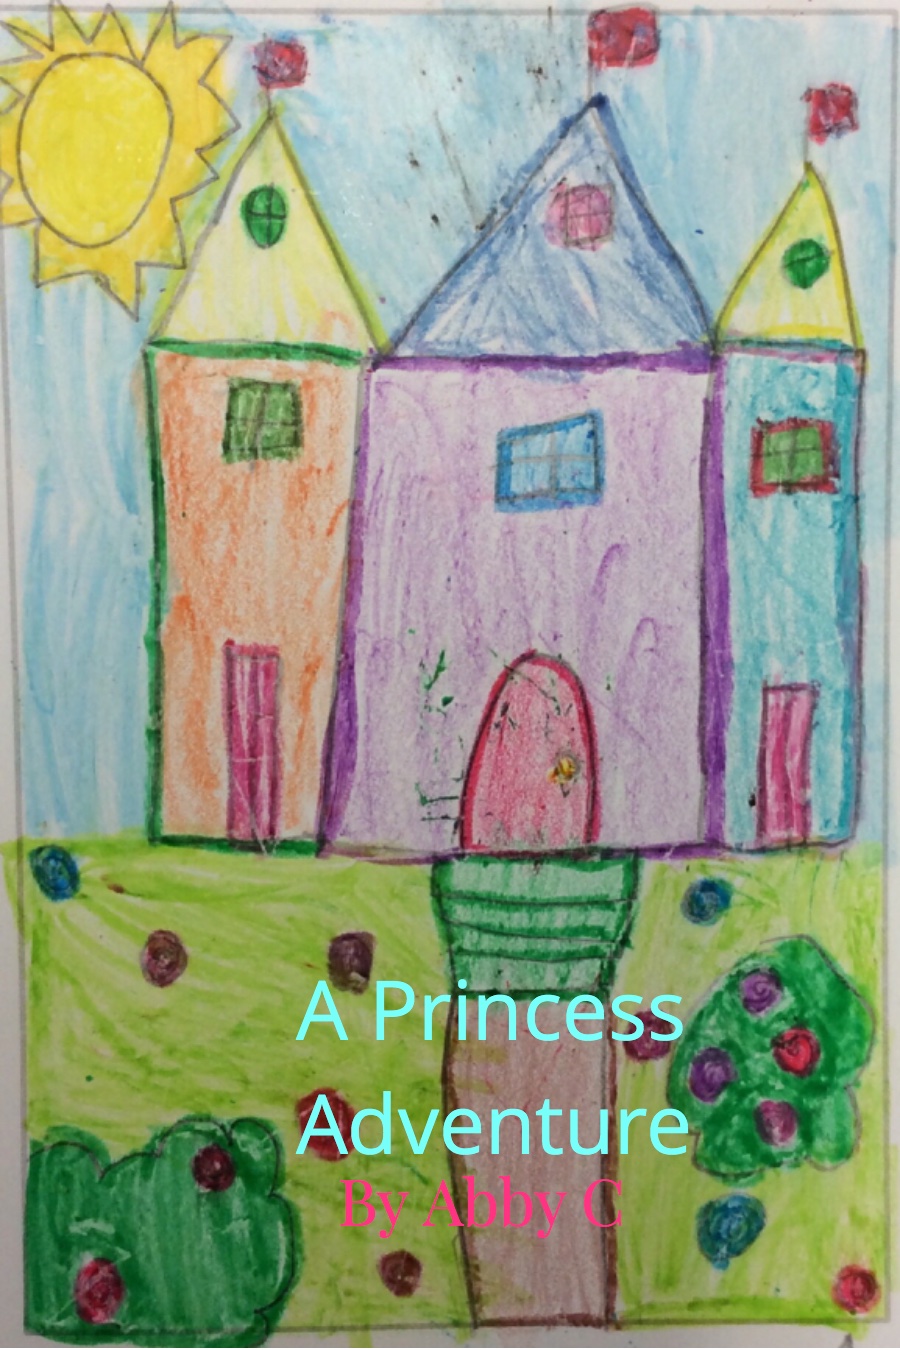 A Princess Adventure by Abby C